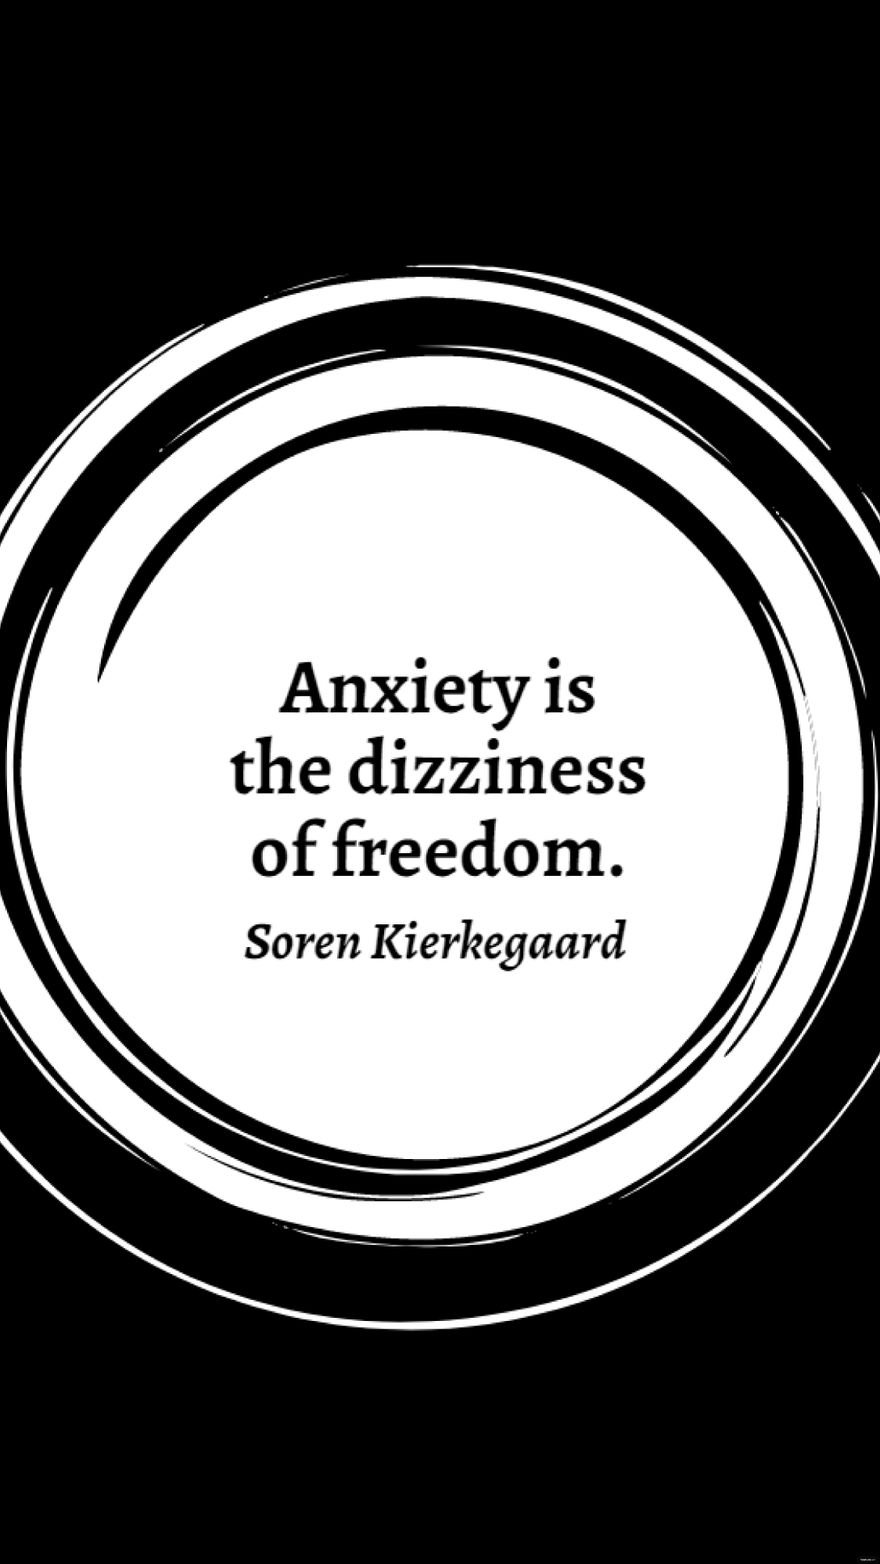 Soren Kierkegaard - Anxiety is the dizziness of freedom.